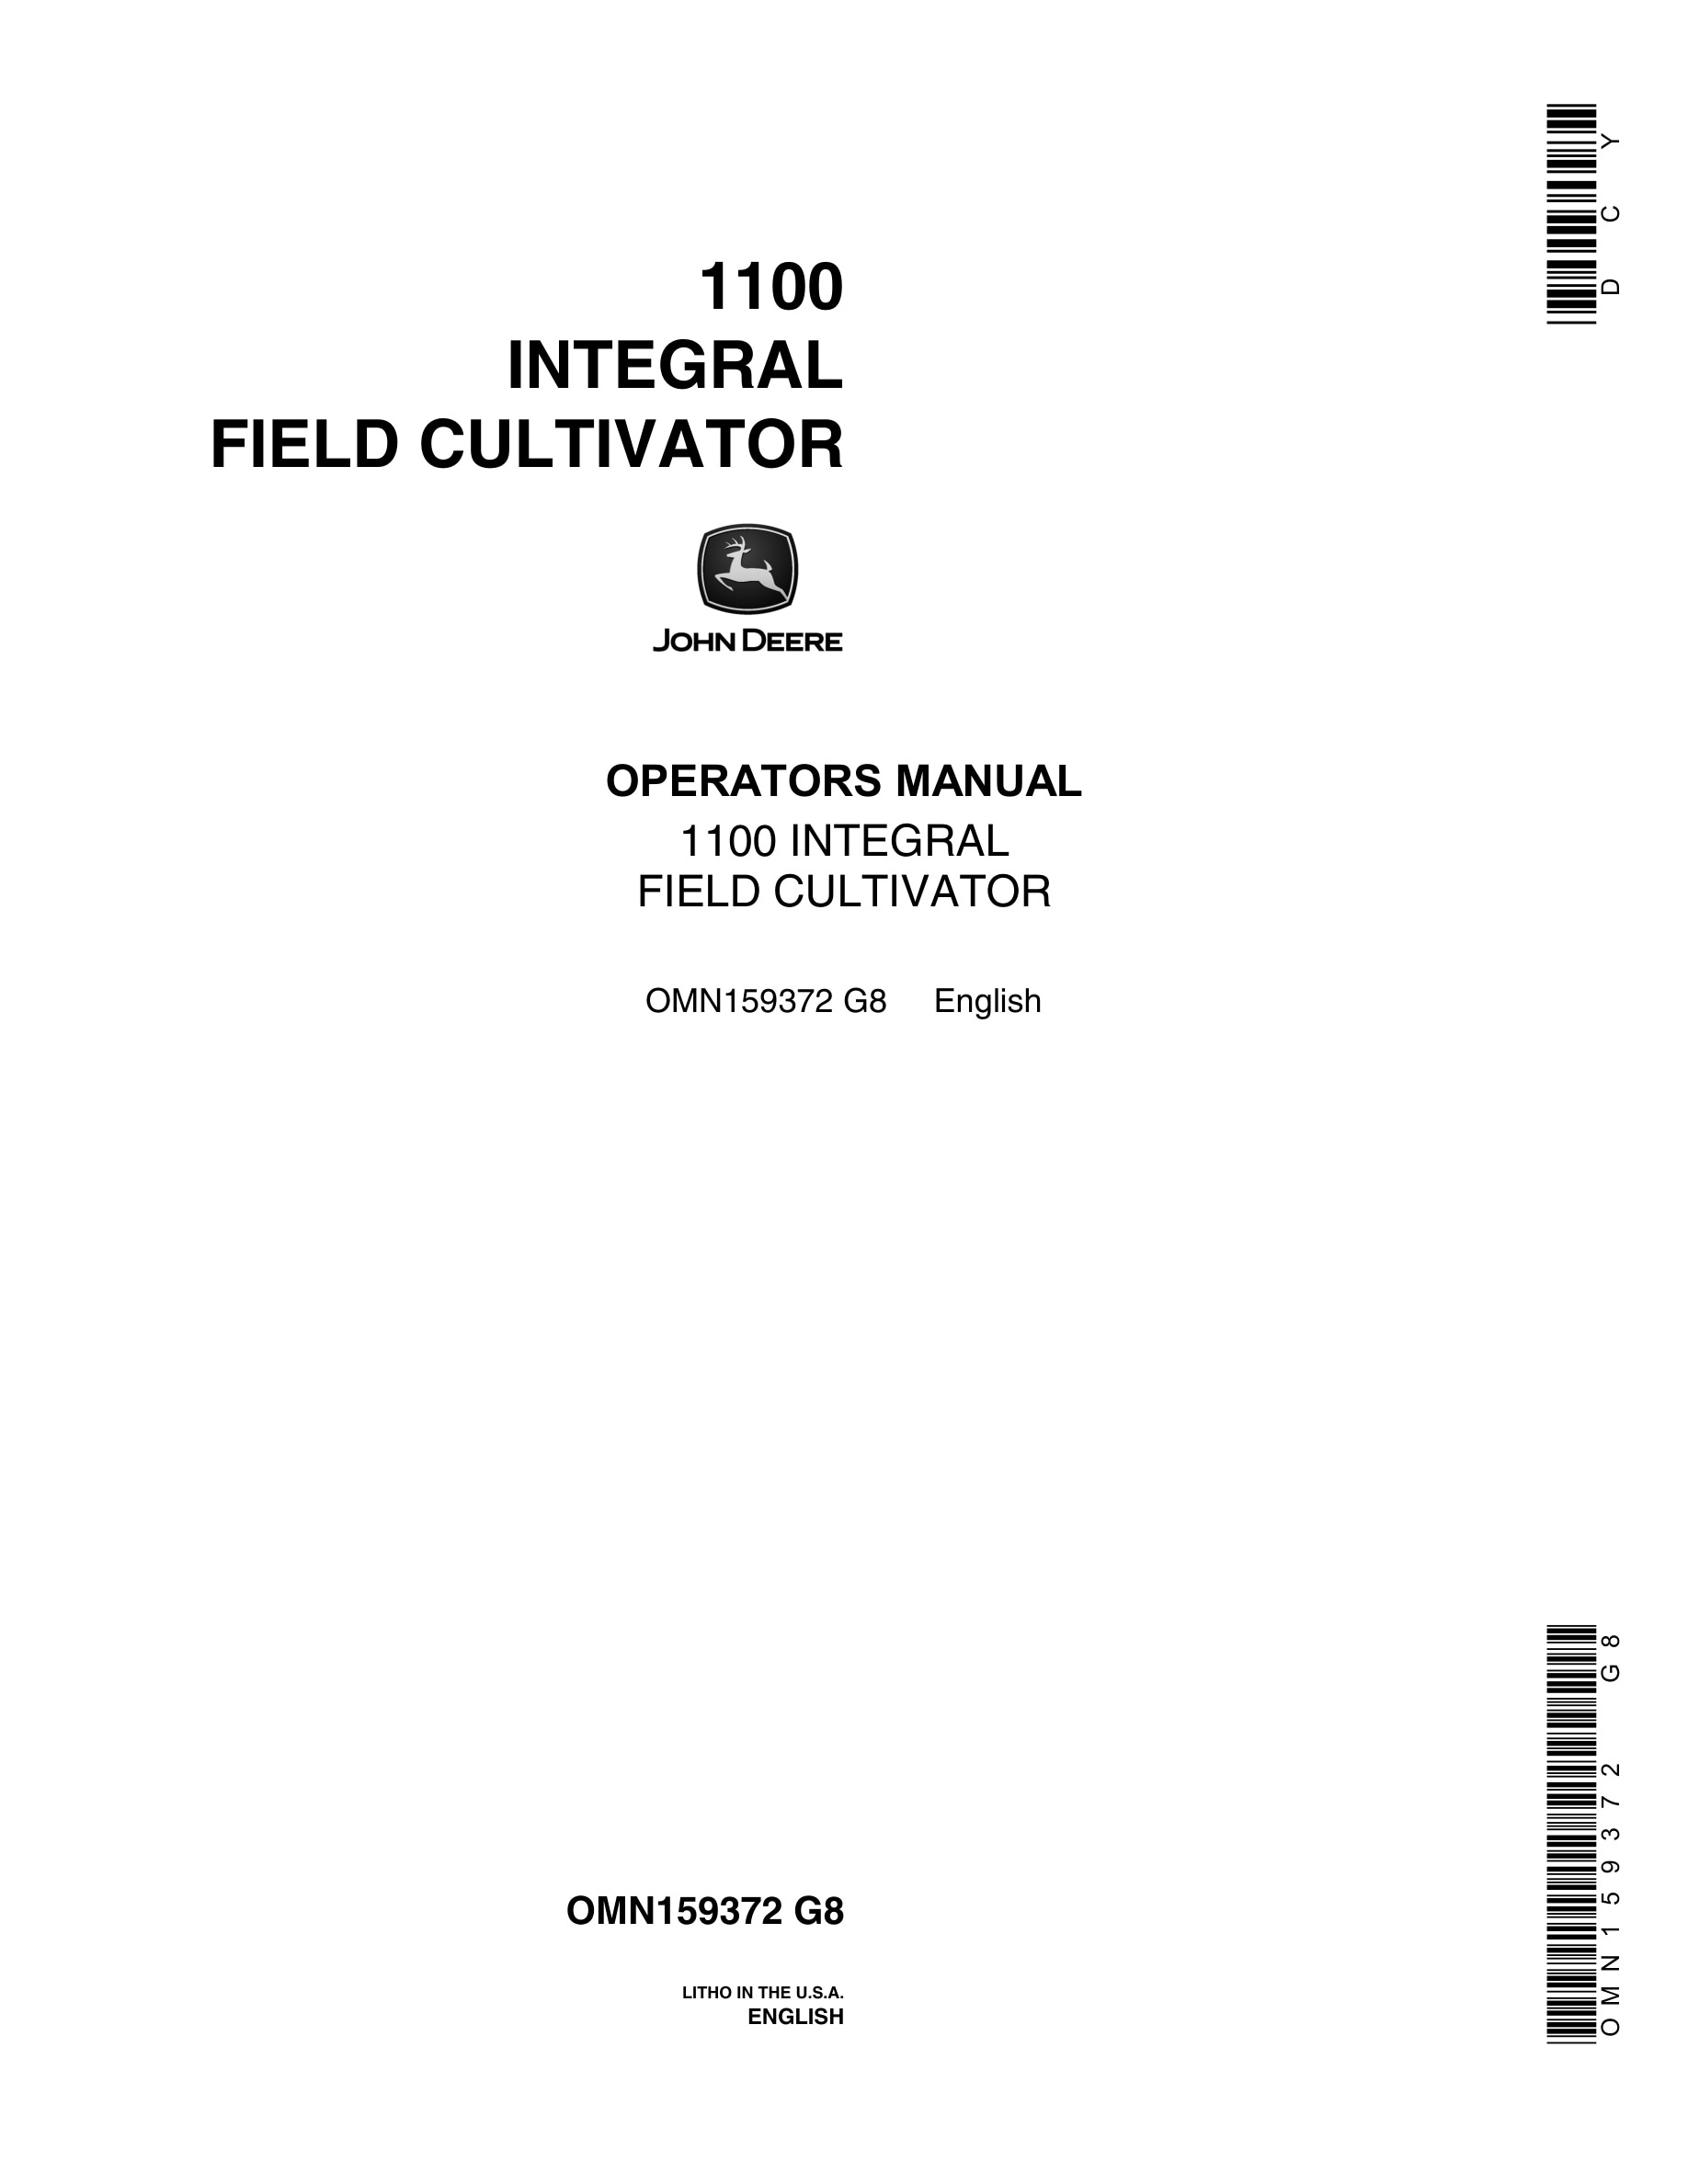 John Deere 1100 INTEGRAL FIELD CULTIVATOR Operator Manual OMN159372-1